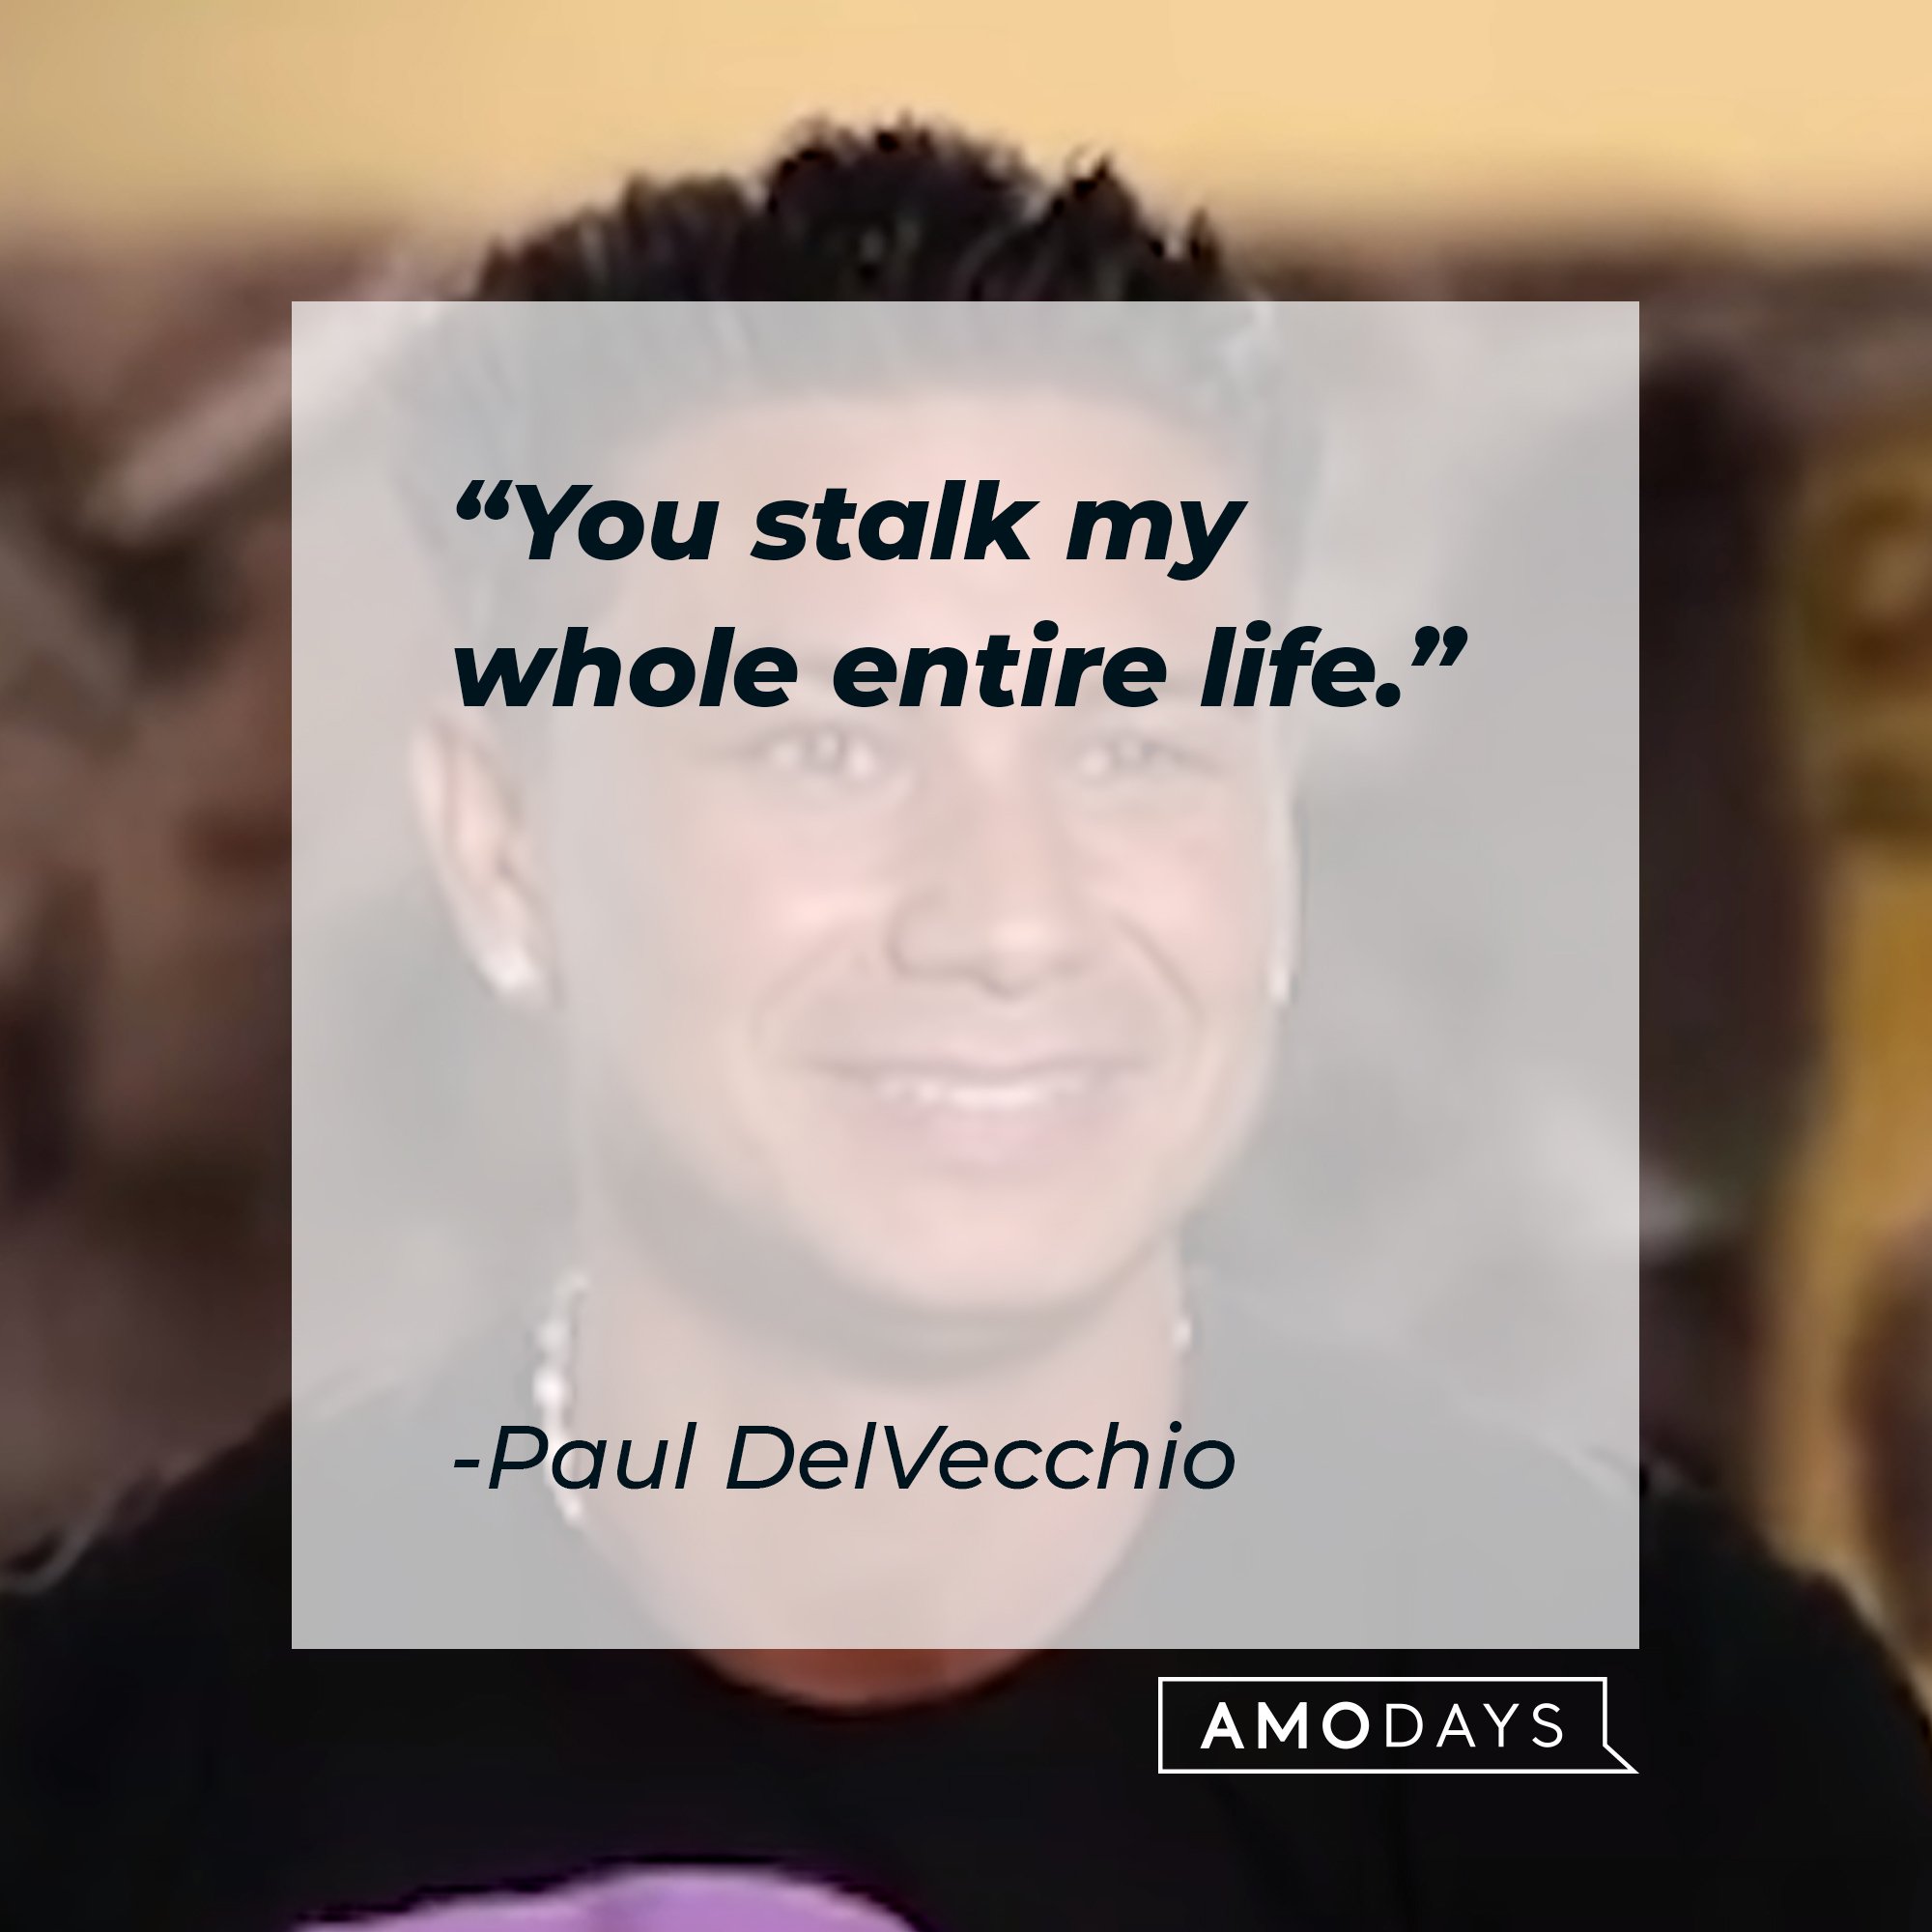 Paul DelVecchio‘s quote: "You stalk my whole entire life." | Image: AmoDays